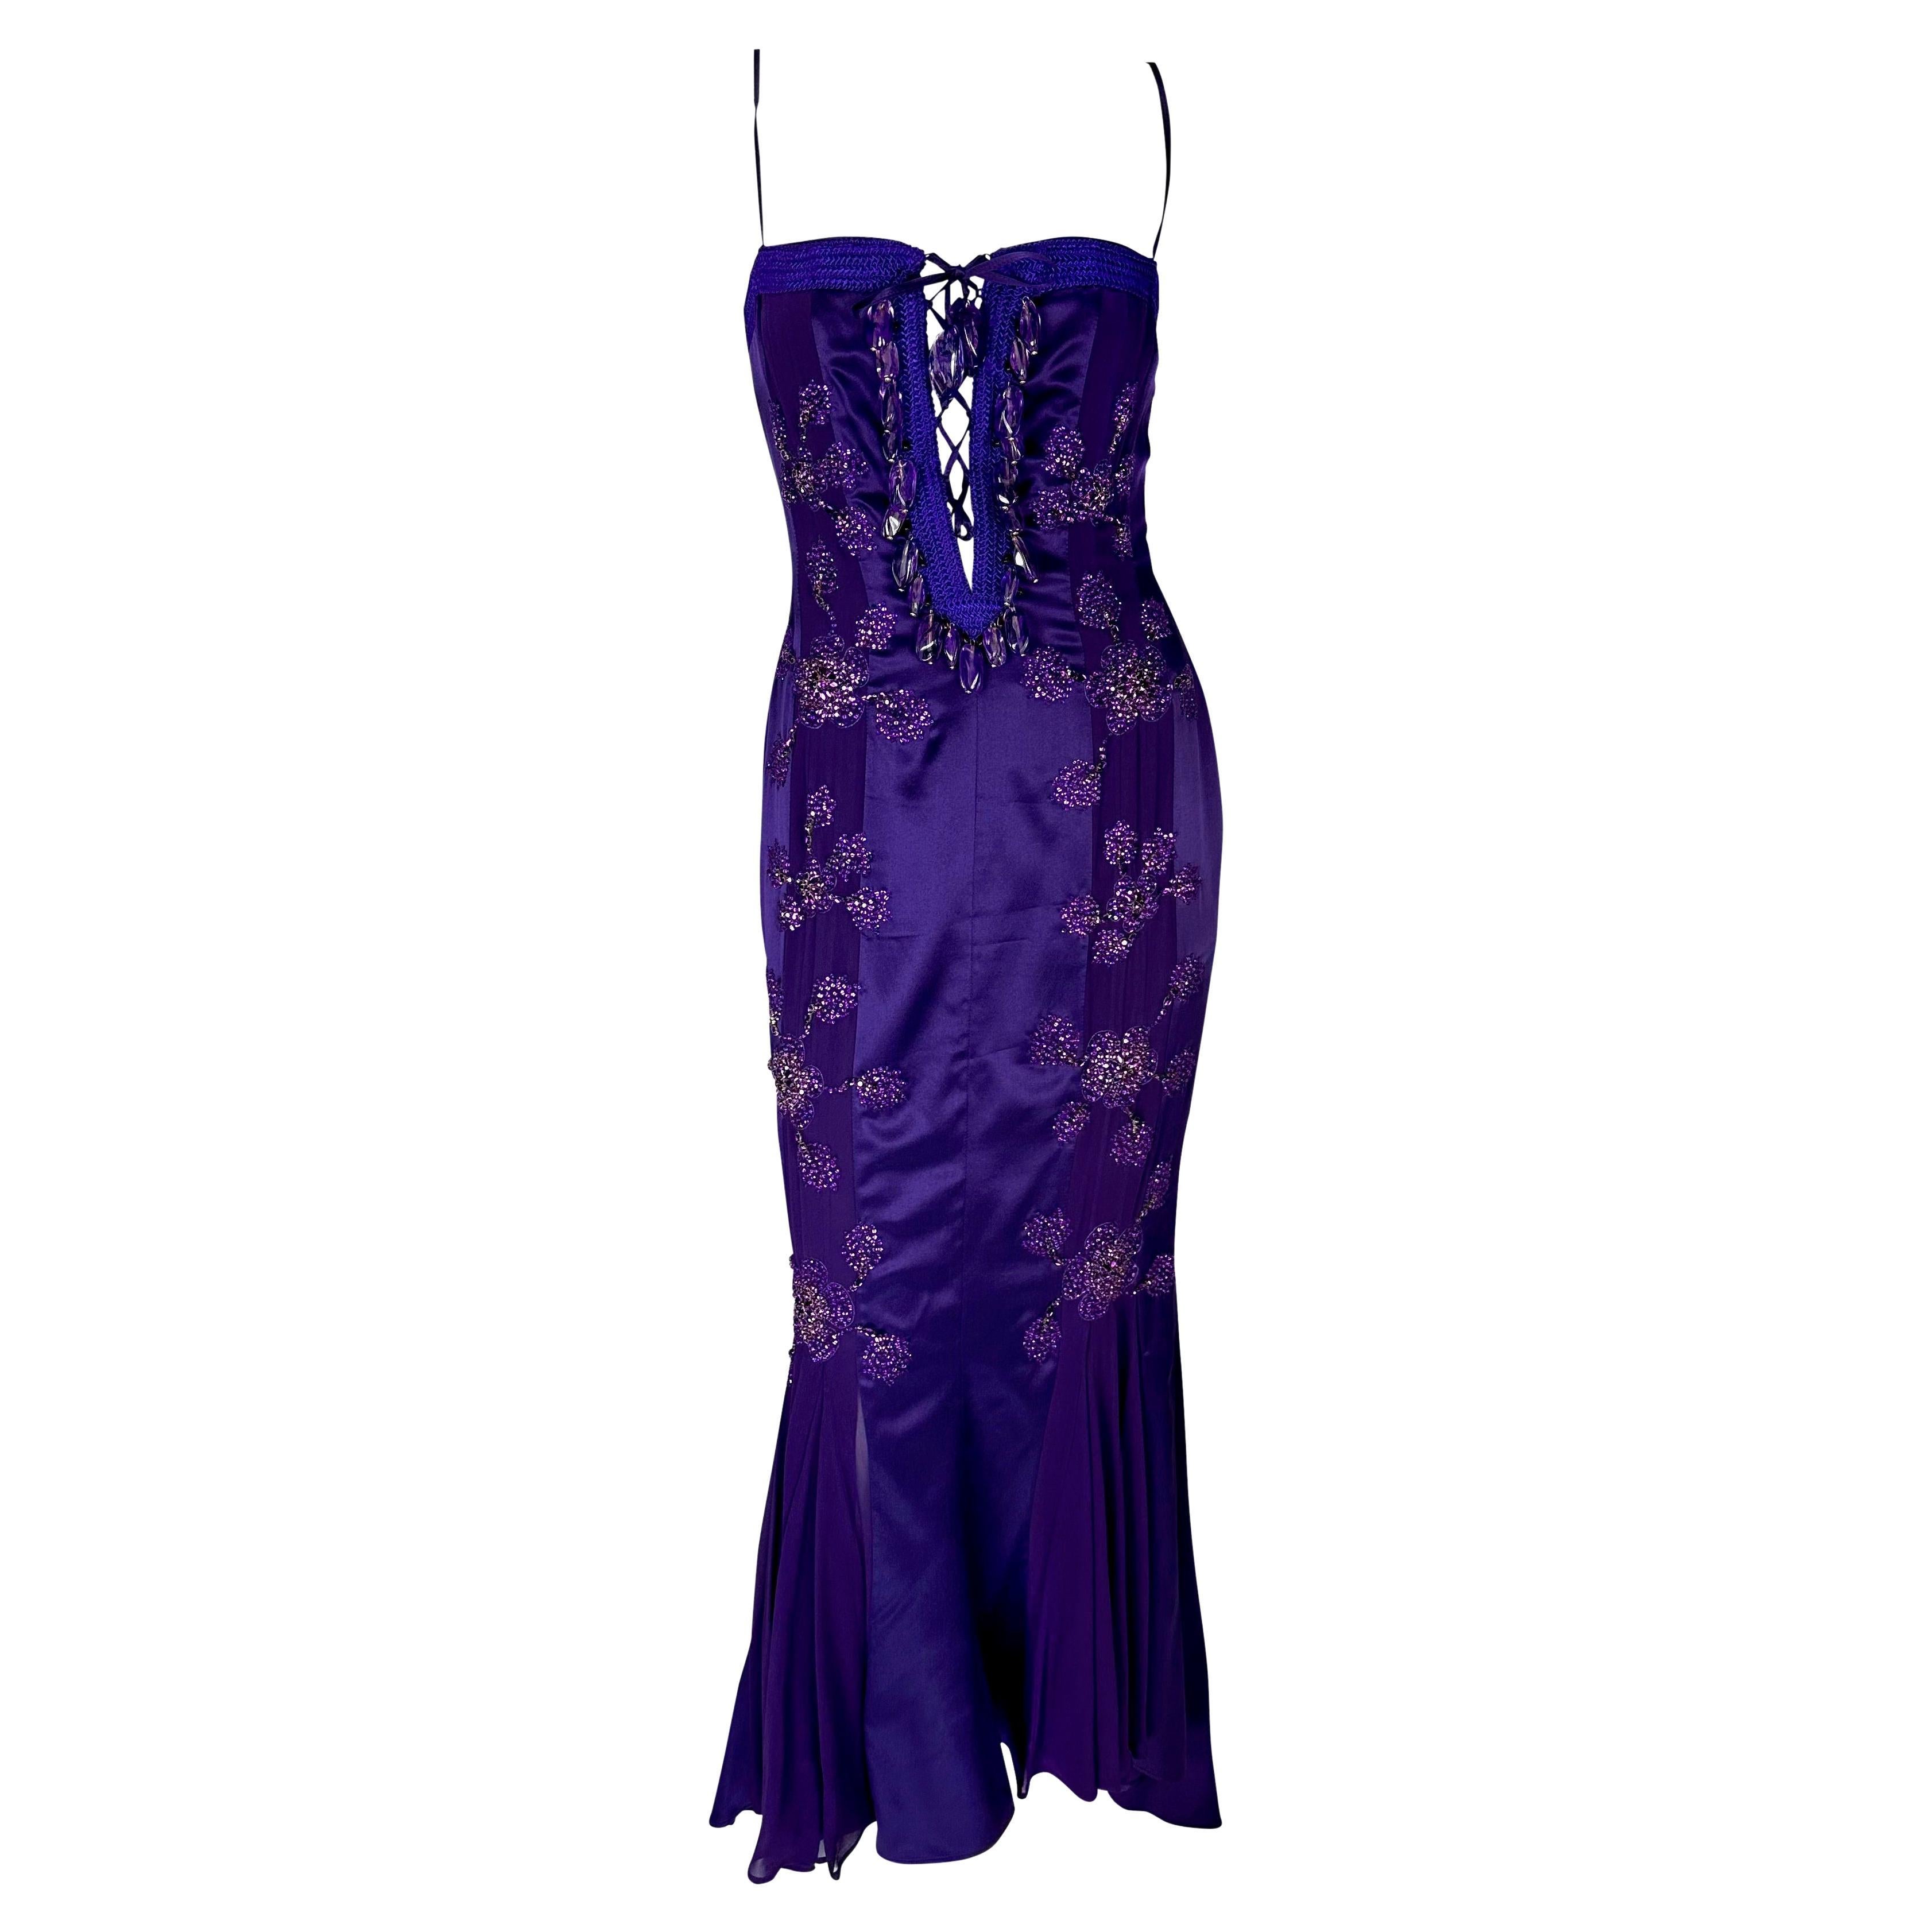 S/S 2005 Emanuel Ungaro by Giambattista Valli Rhinestone Purple Lace-Up Gown For Sale